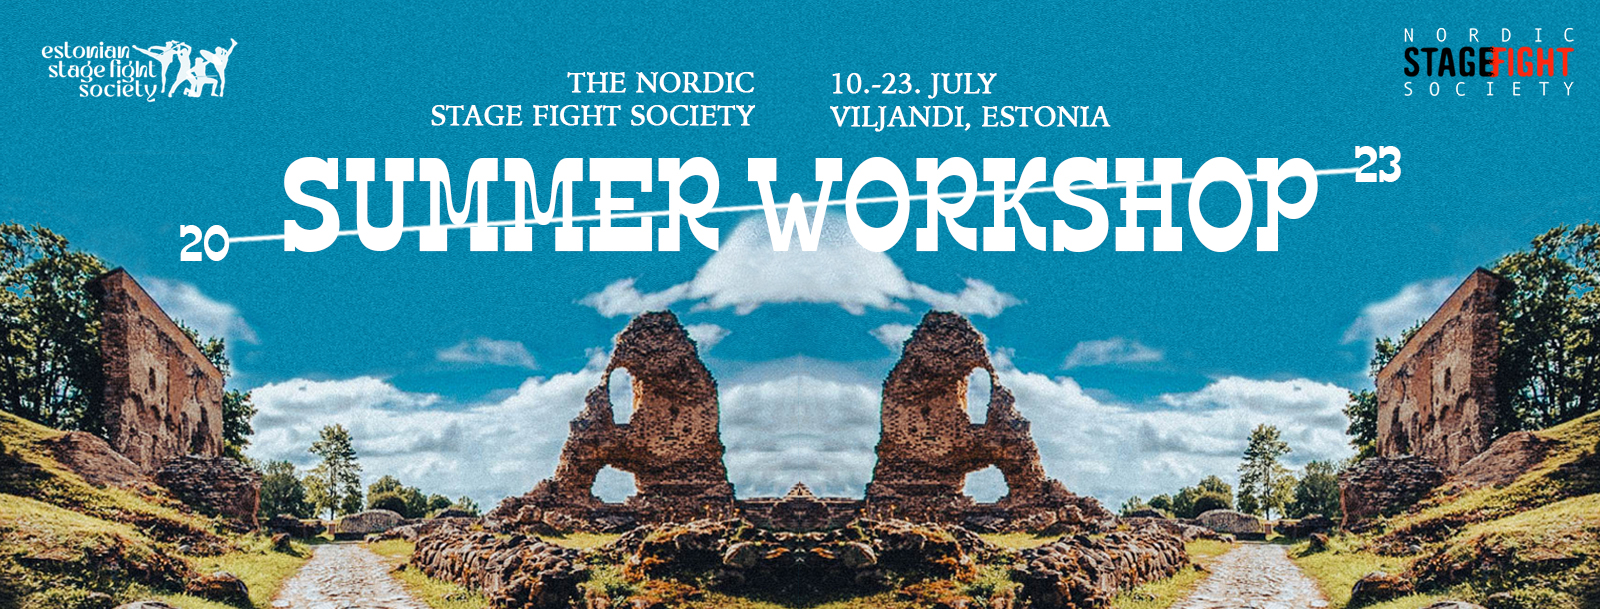 The Nordic Stage Fight Society Summer Workshop 10.-23.7. in Viljandi, Estonia